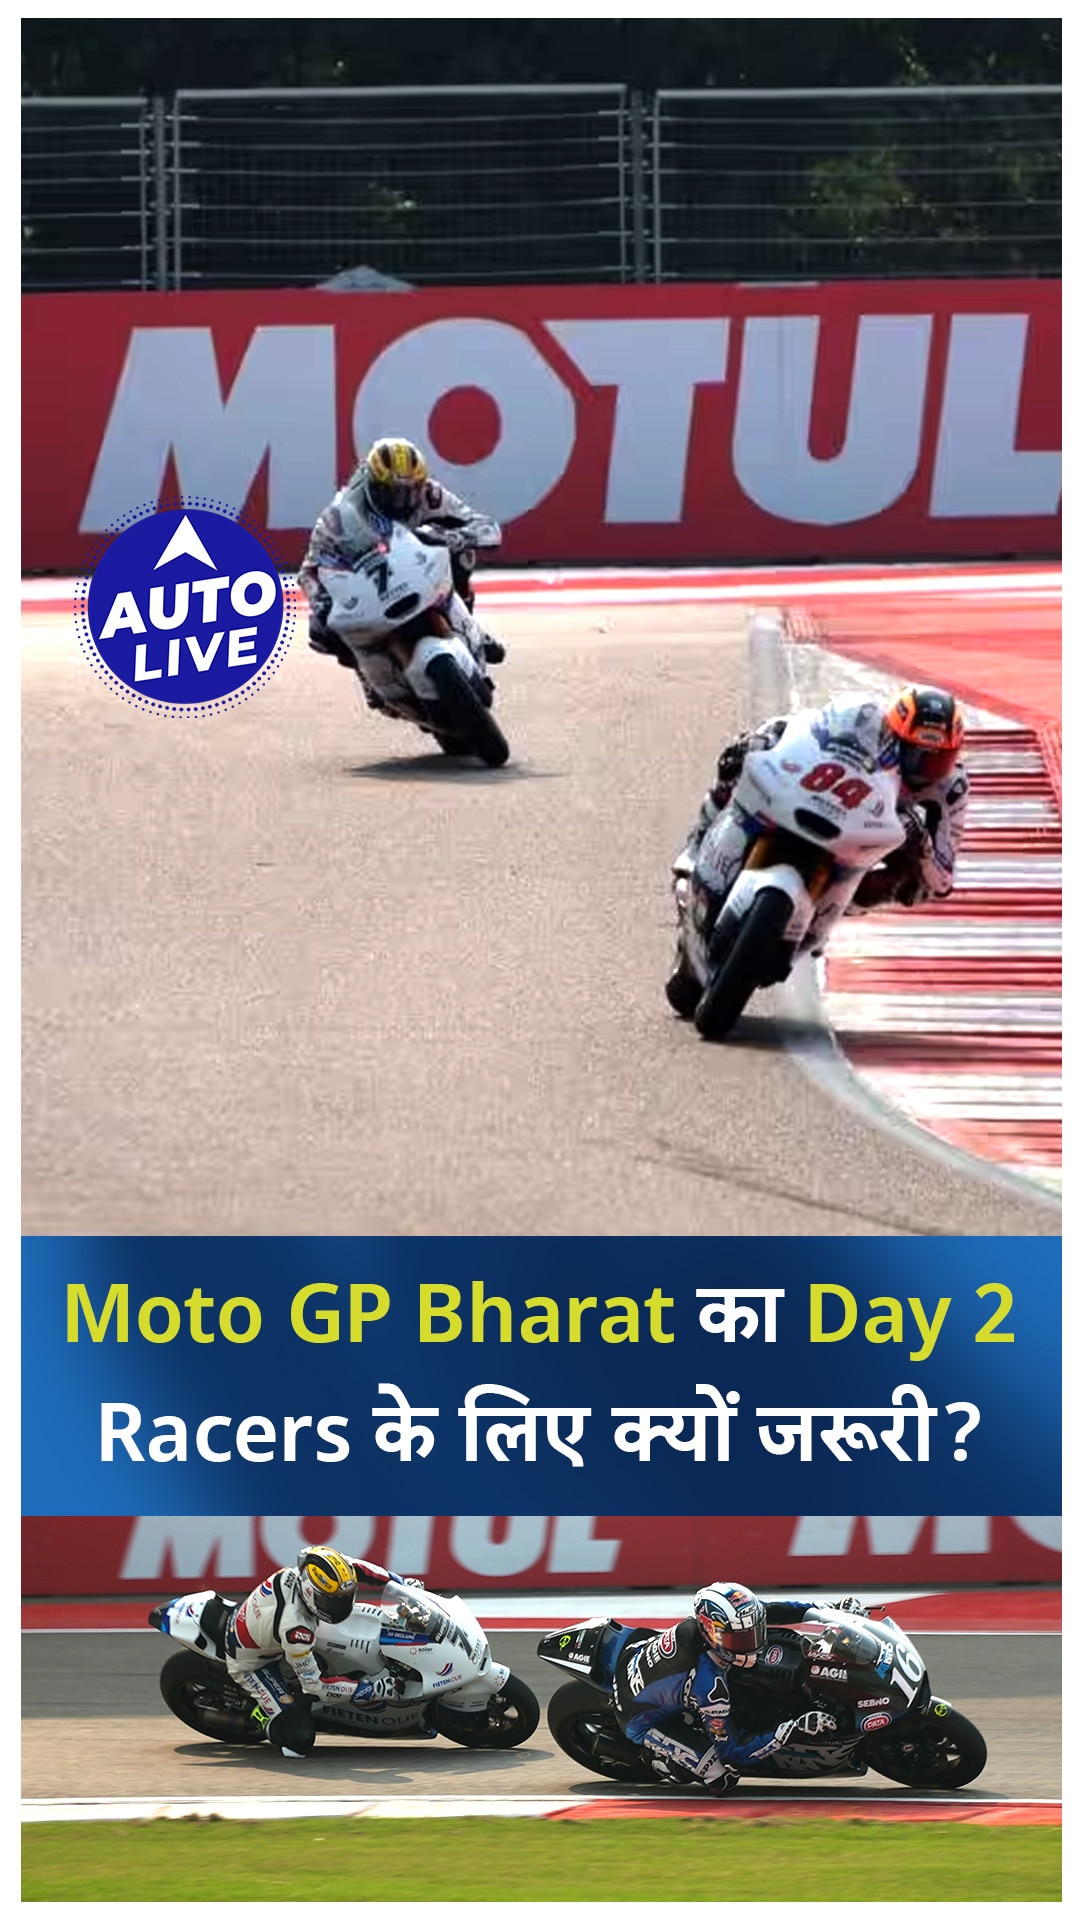 Moto GP Bharat के लिए Day 2 क्यों है इतना ज़रूरी ! Auto Live Why Is Day 2 So Important For Moto GP India Auto Live